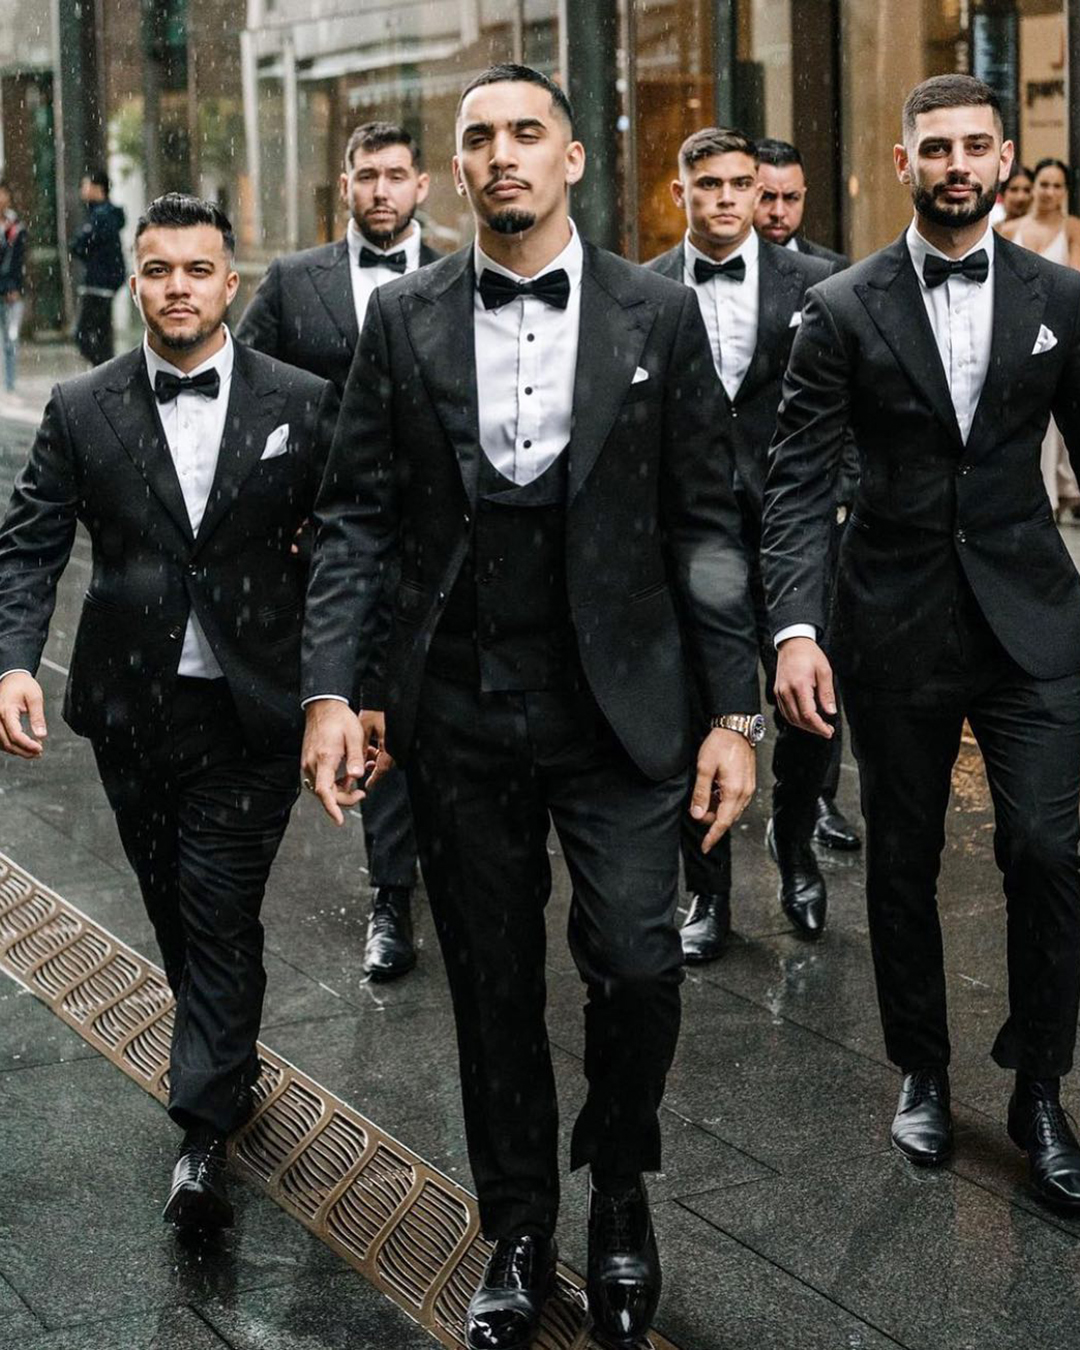 black wedding suit with bow tie tuxedo with white suavebespoke